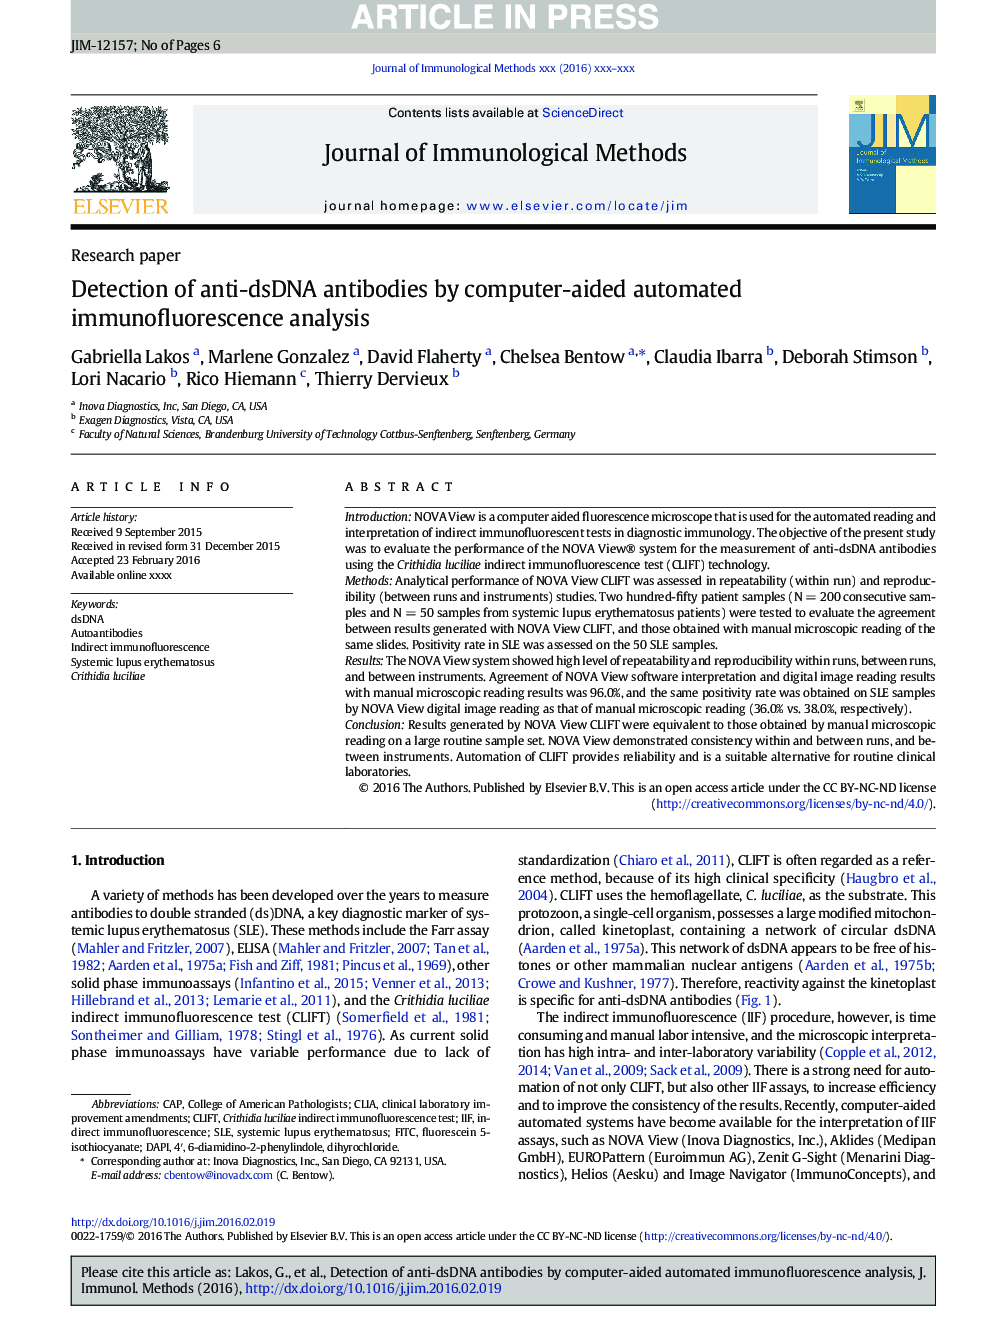 Detection of anti-dsDNA antibodies by computer-aided automated immunofluorescence analysis